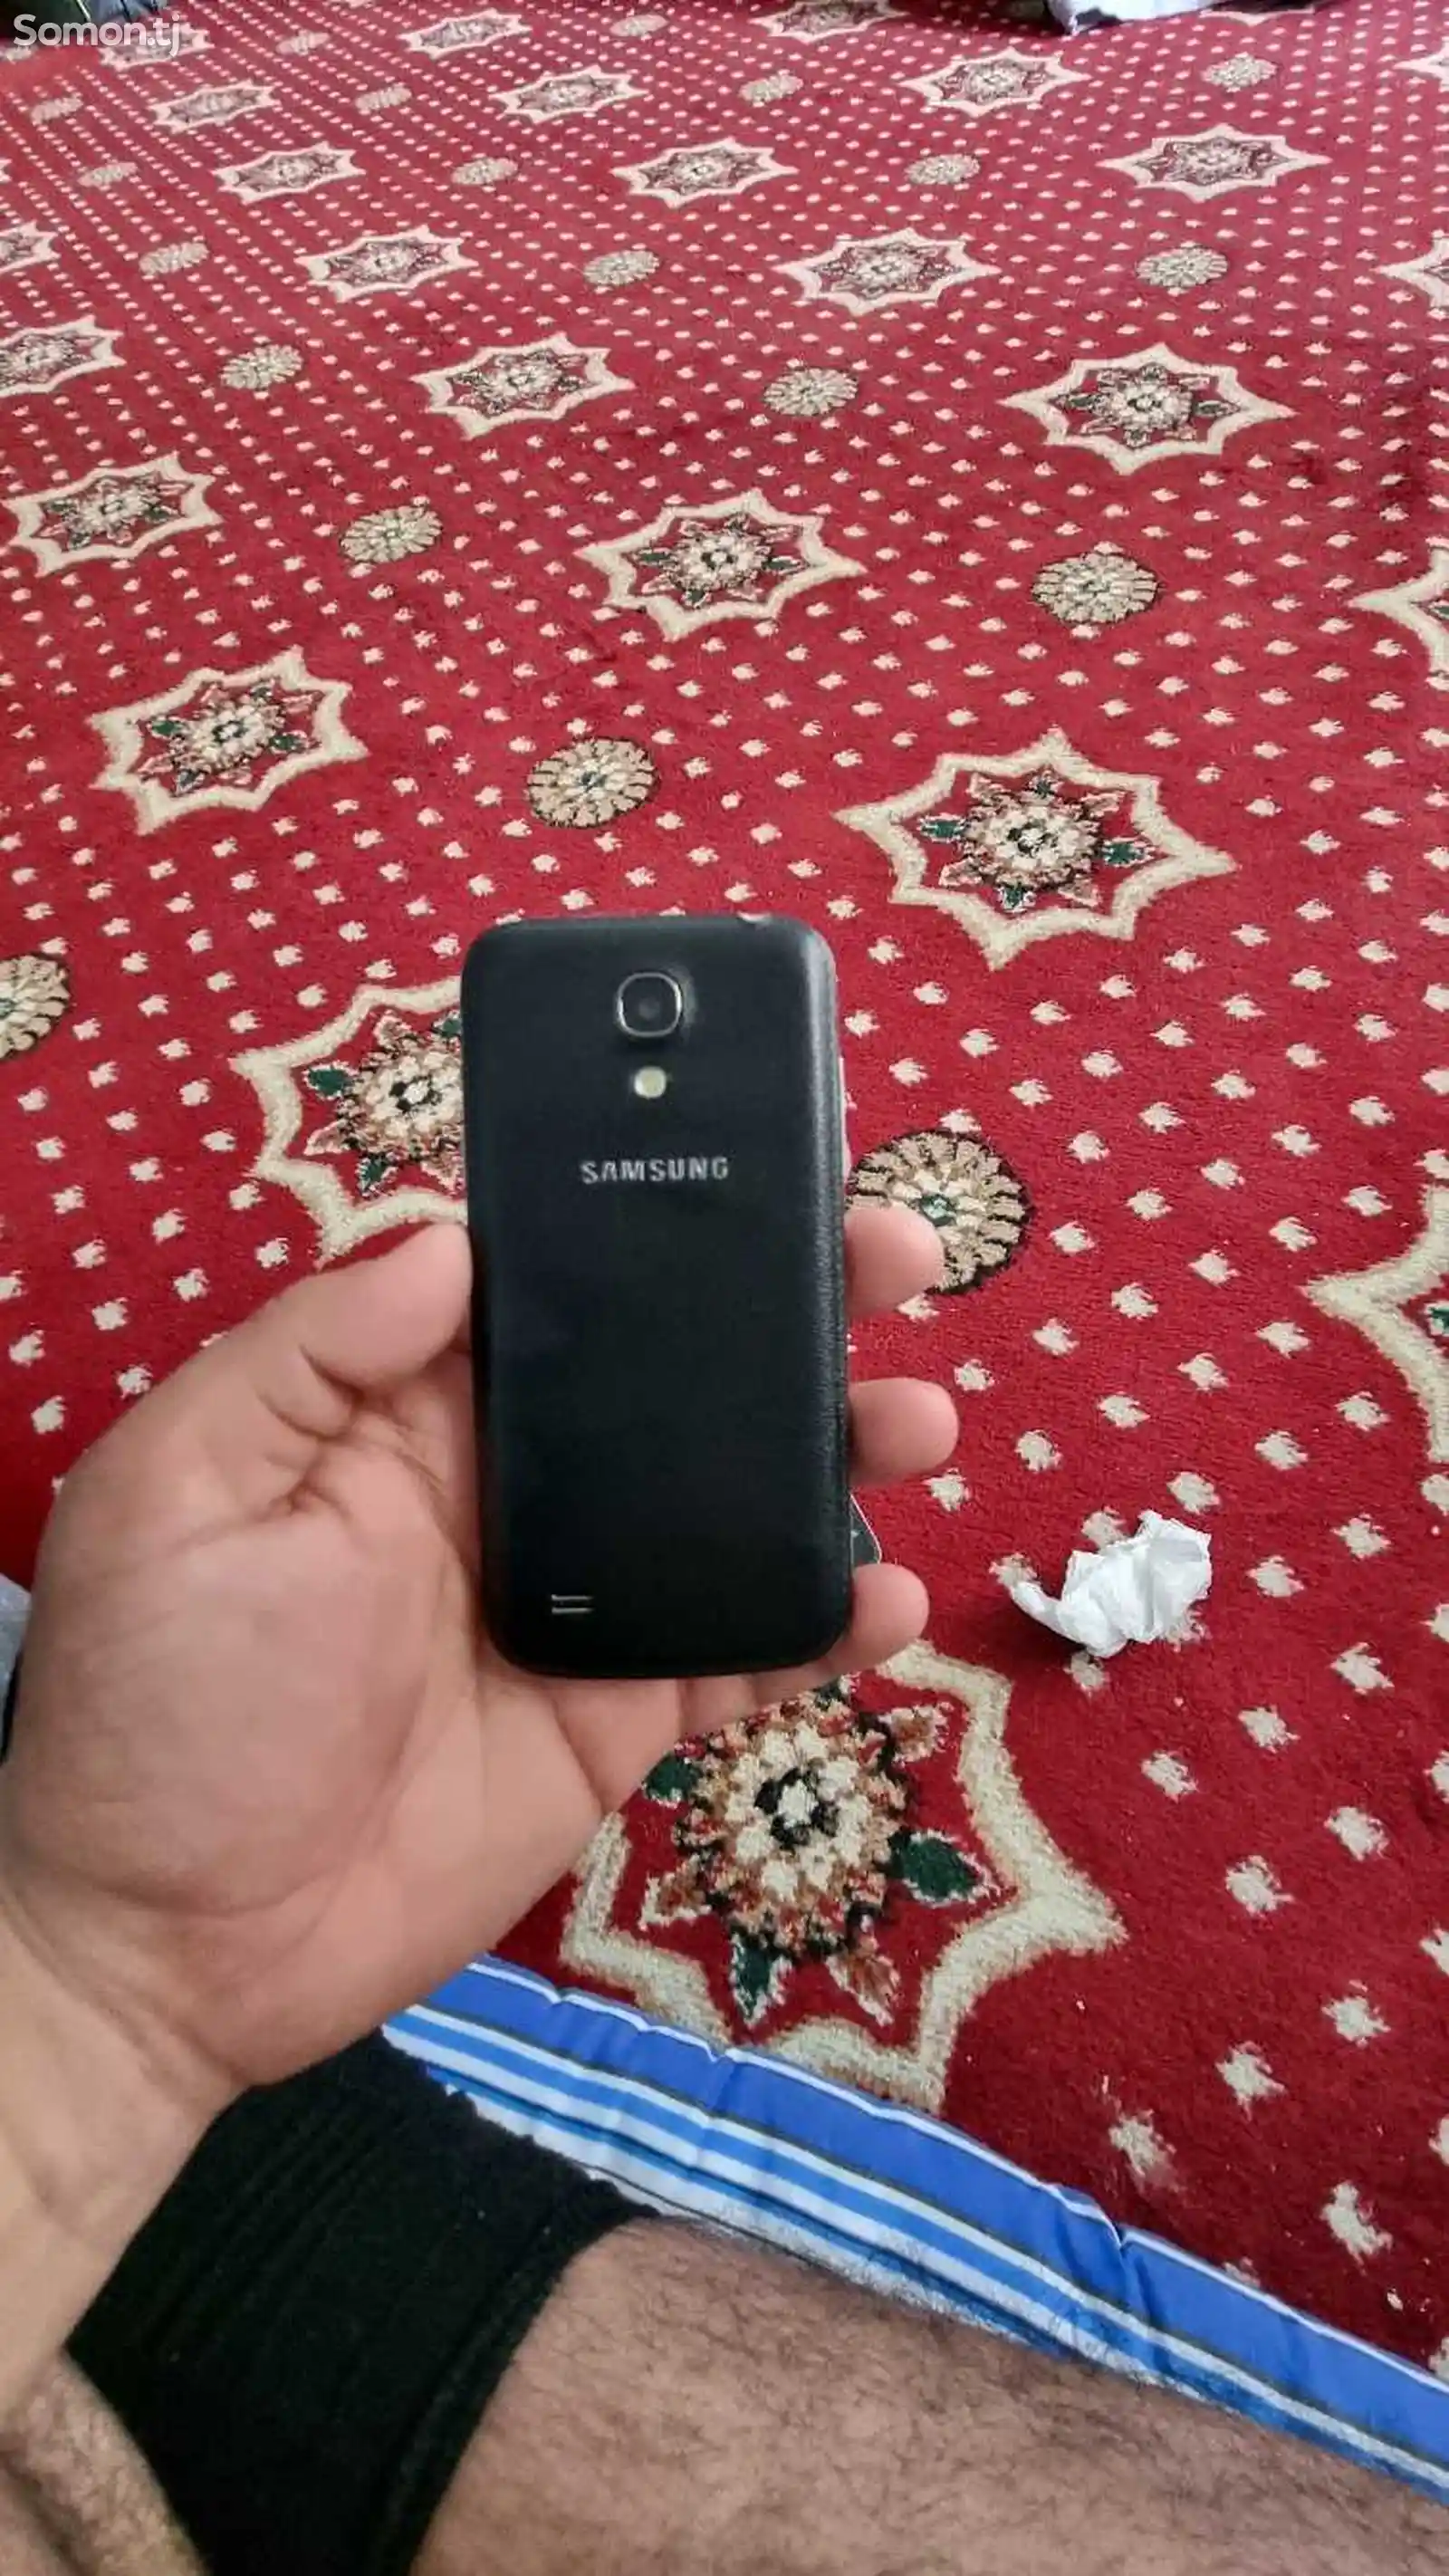 Samsung Galaxy S4 mini-2